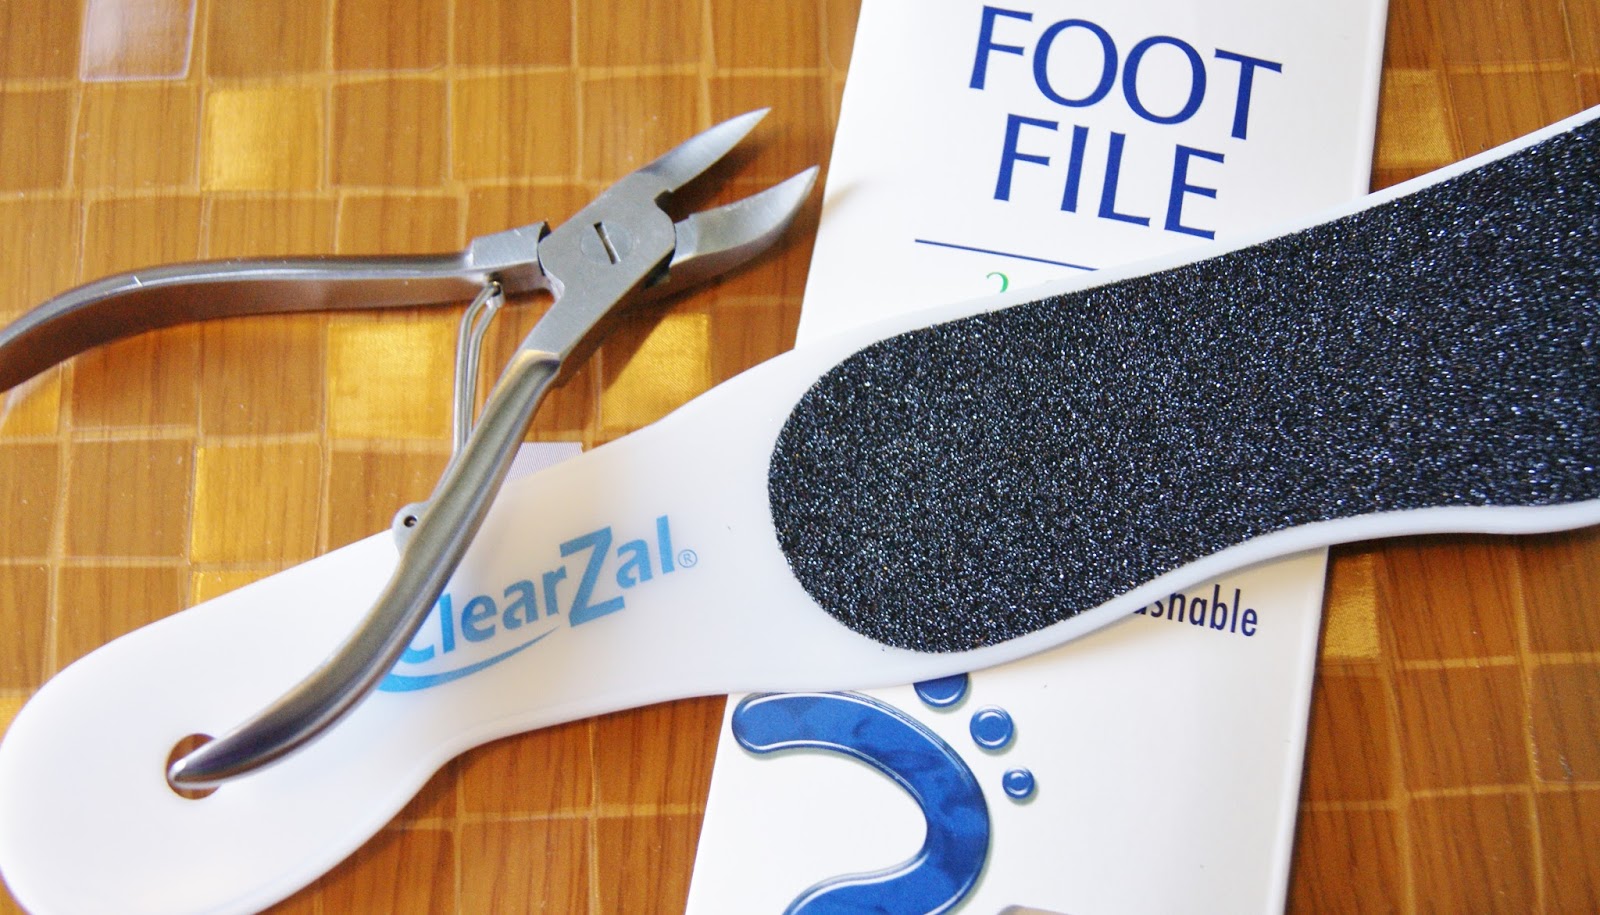 ClearZal Foot File